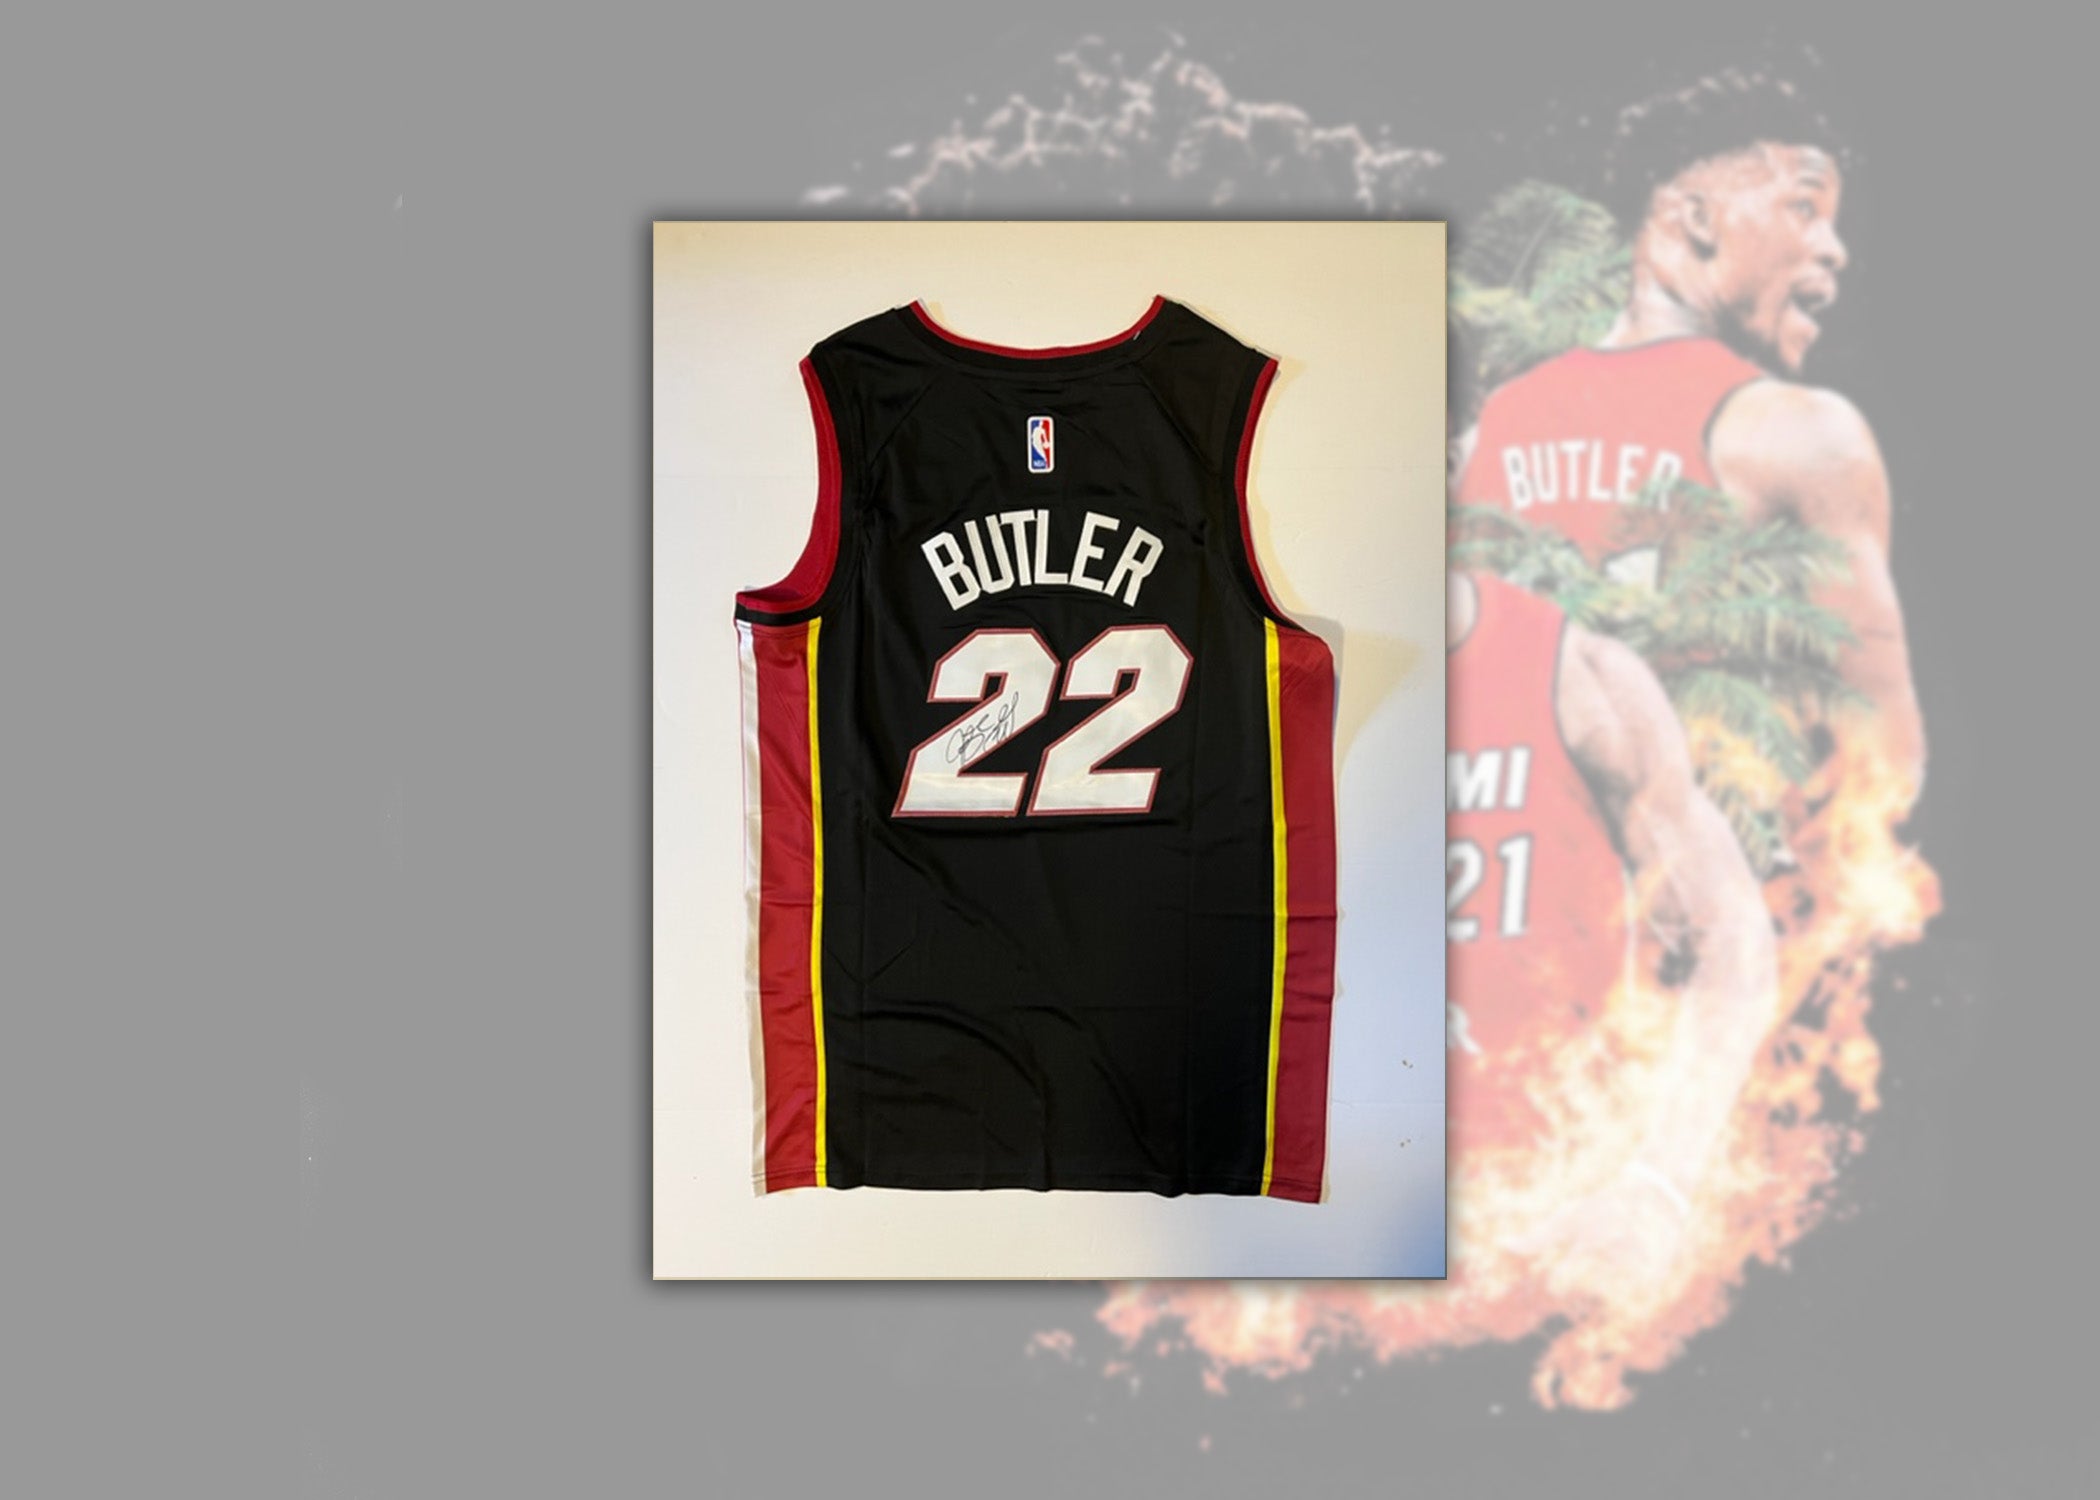 Jimmy Butler, Miami Heat jersey